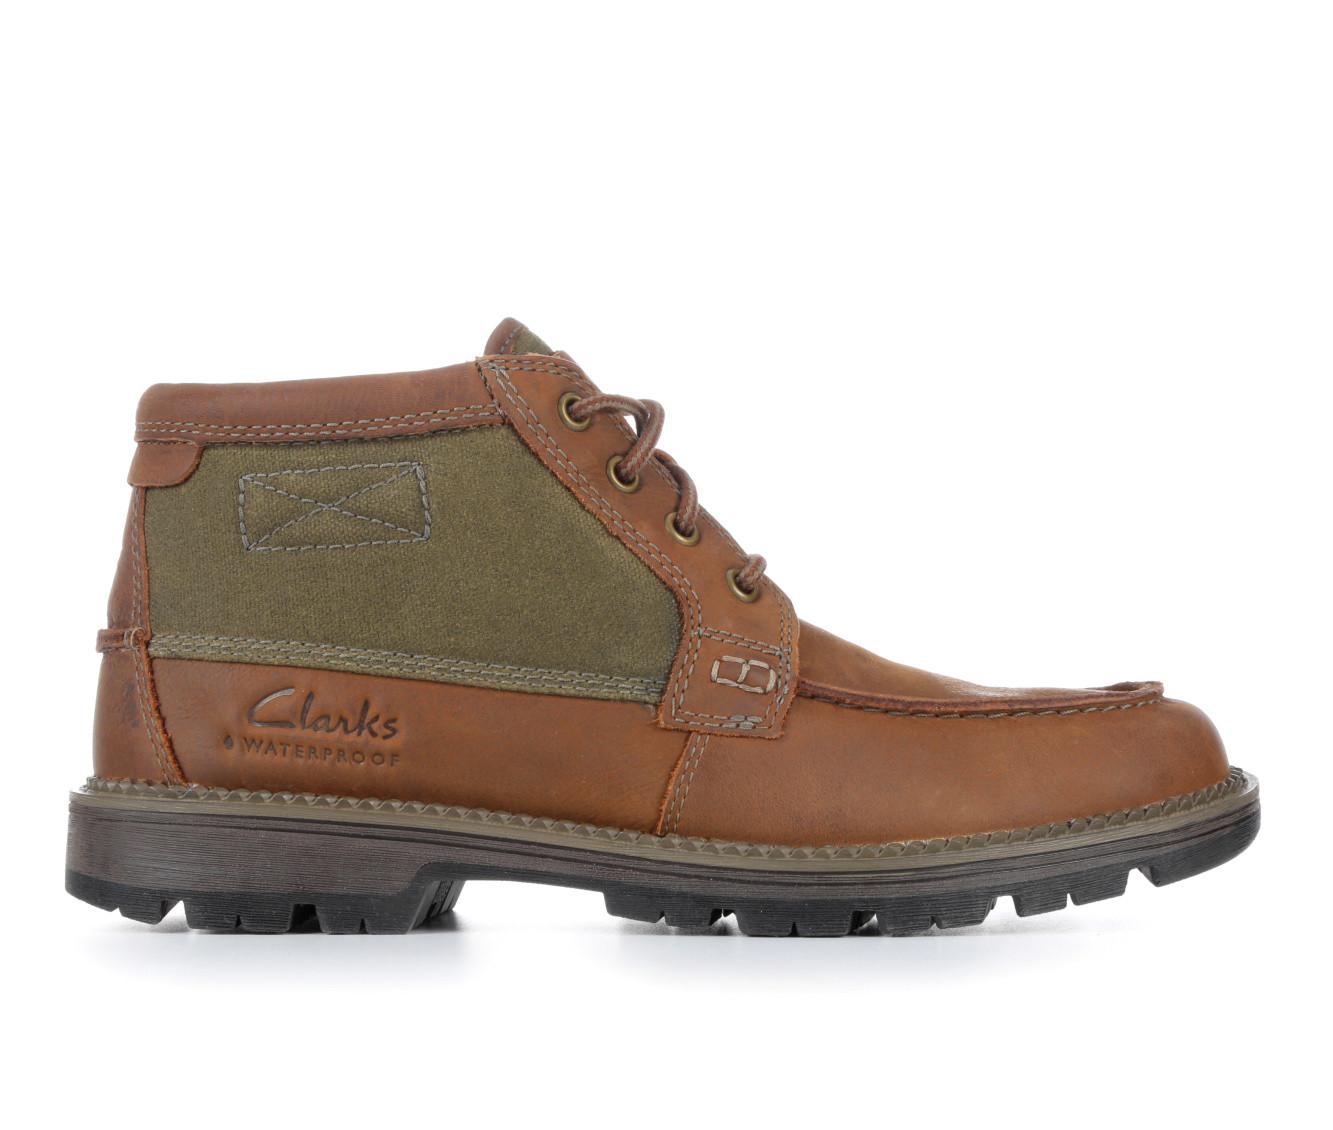 Men's Clarks Maplewalk Moc Toe Casual Boots